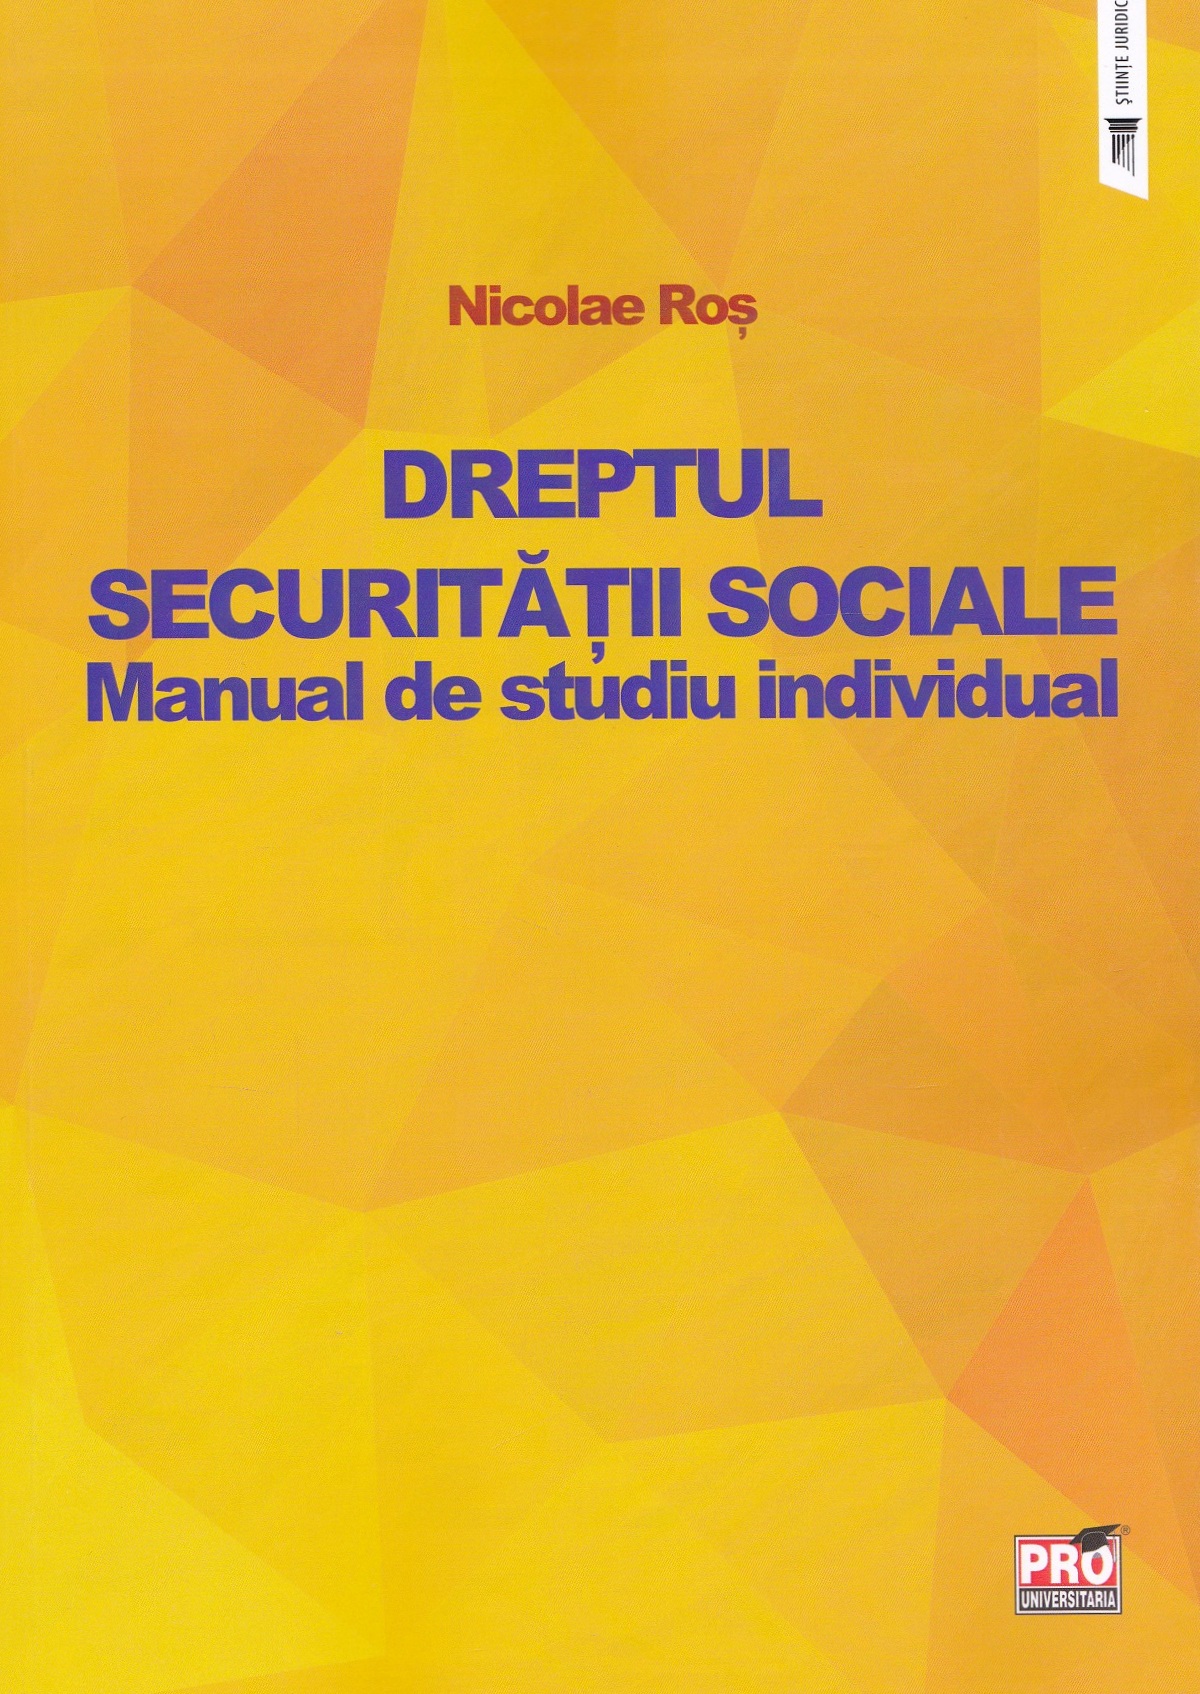 Dreptul securitatii sociale. Manual de studiu individual - Nicolae Ros